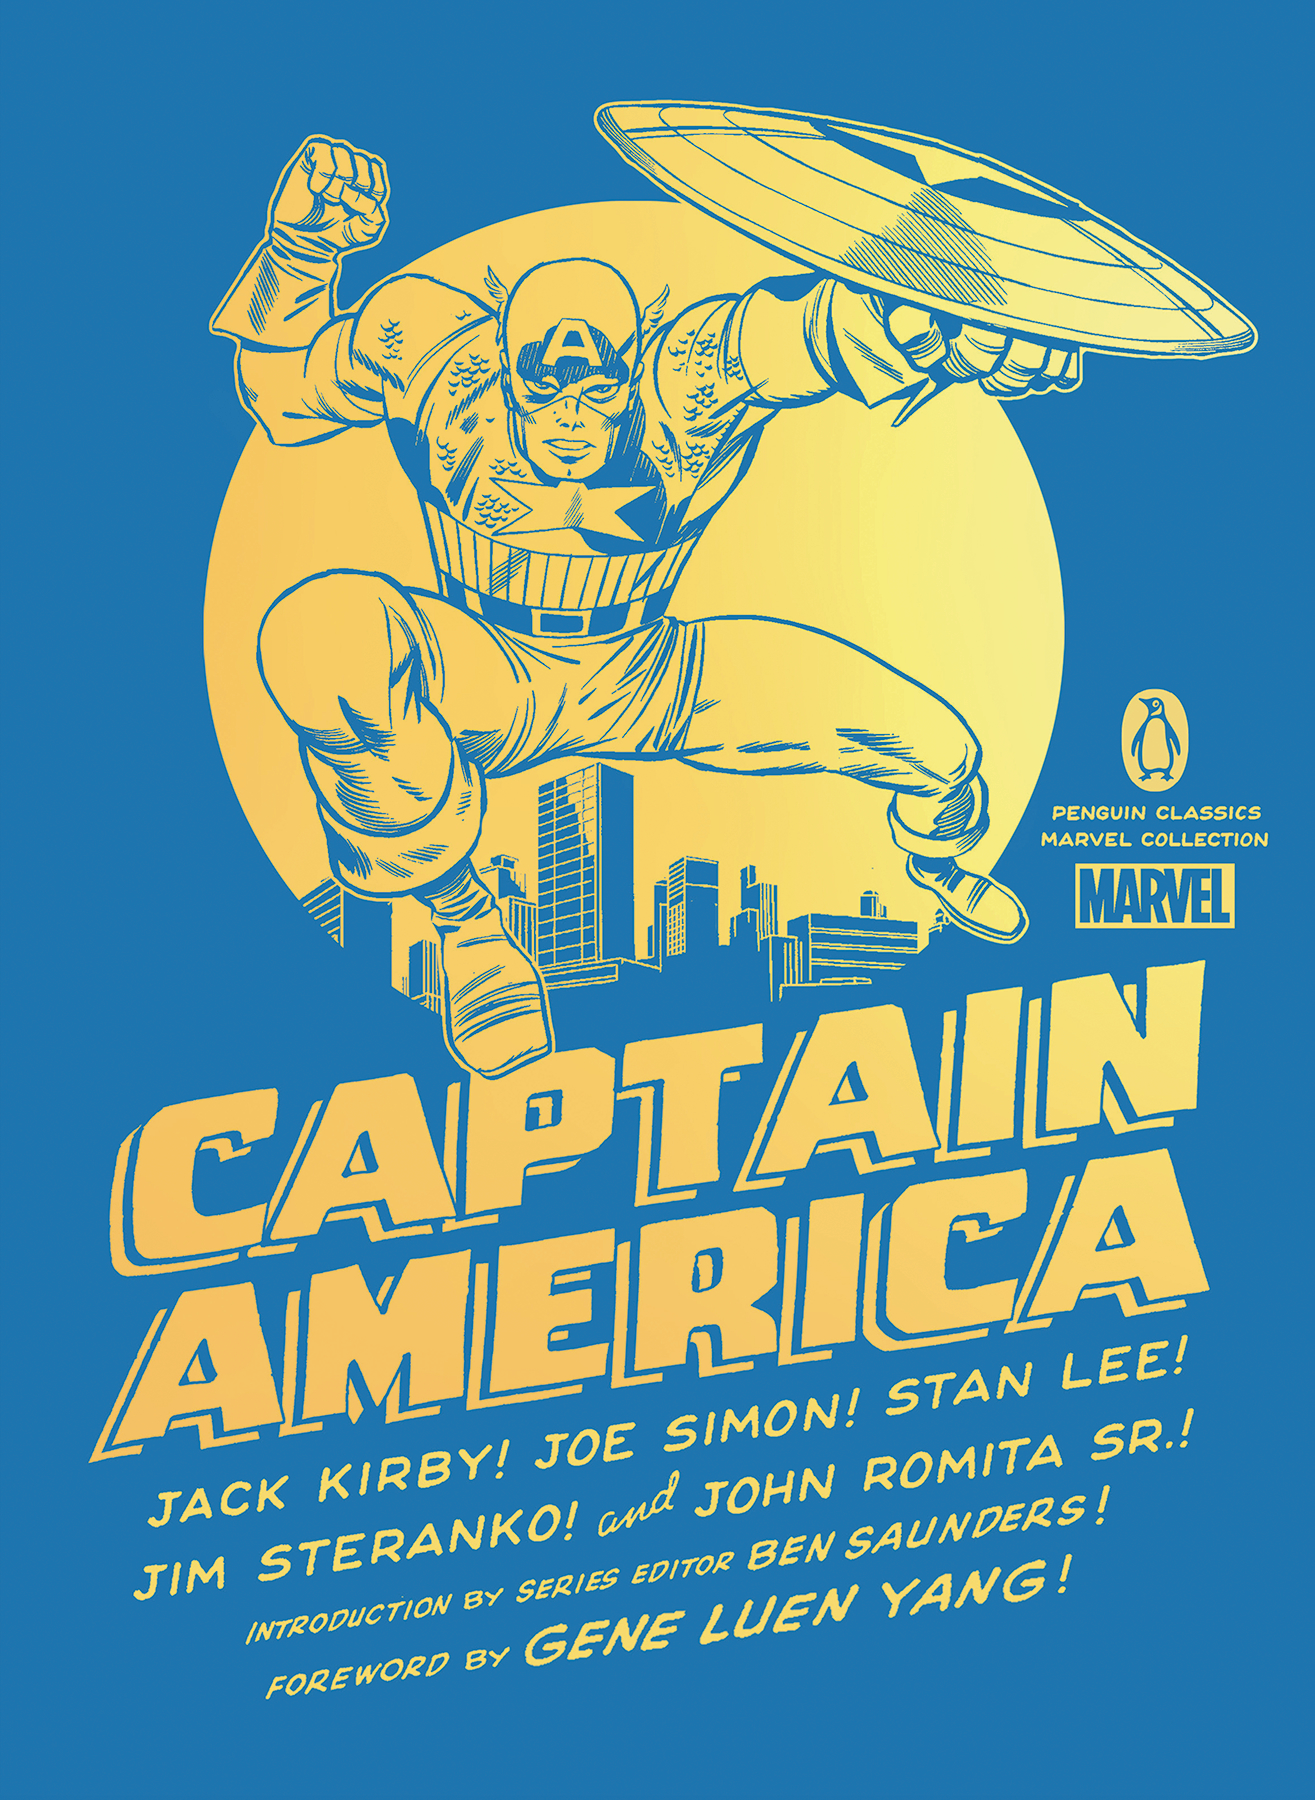 Penguin Classics Marvel Collection Hardcover Volume 1 Captain America